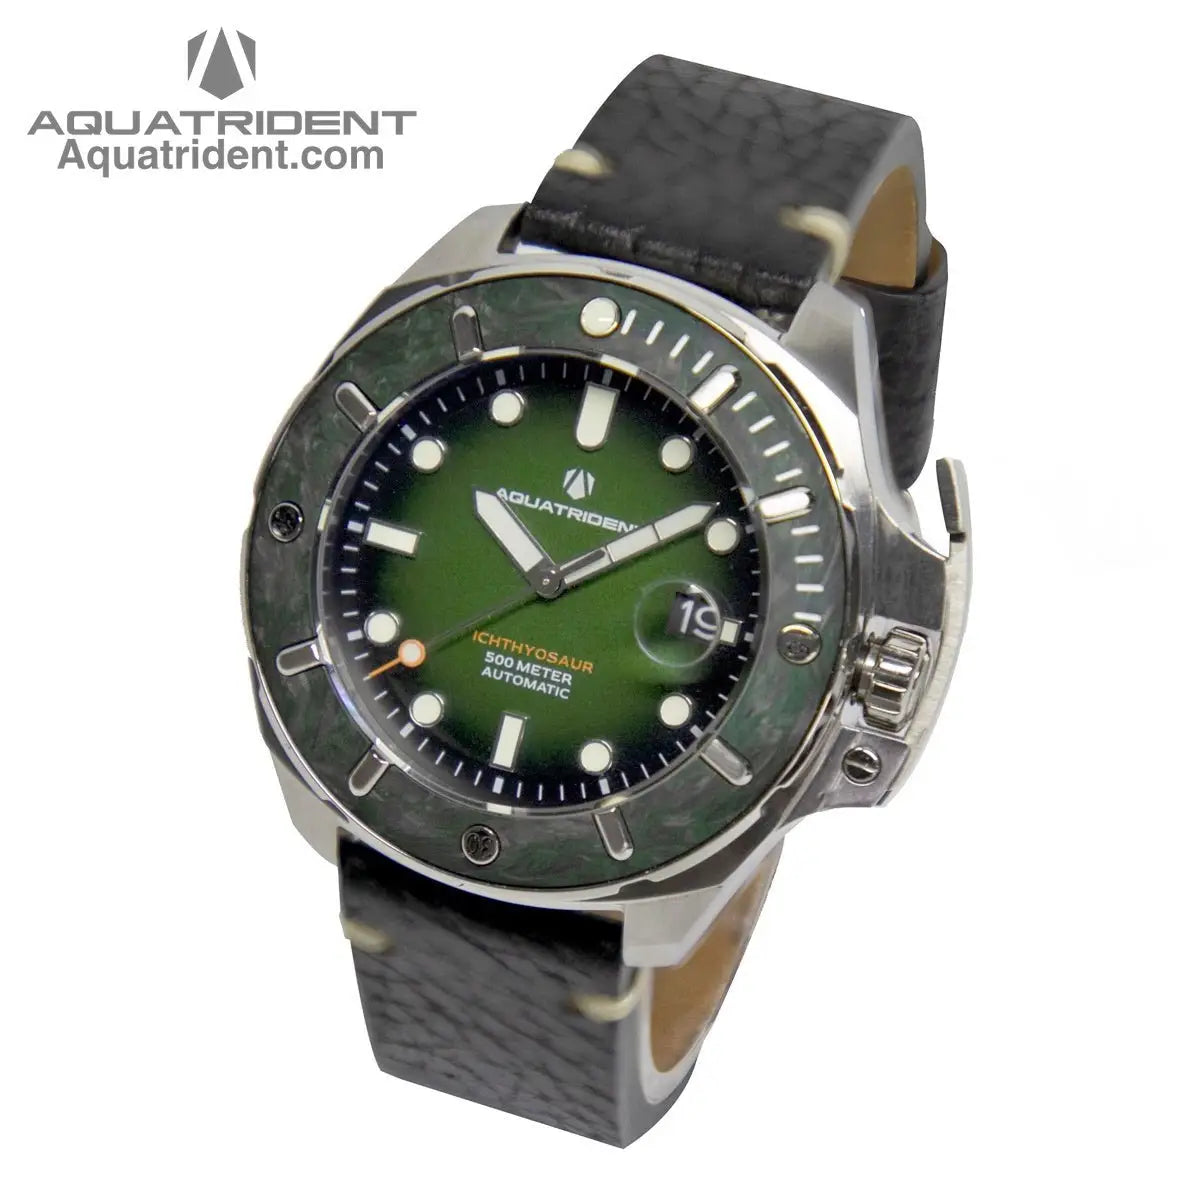 steel case-green black marbled carbon fiber bezel-green dail-black genuine leather strap-watch